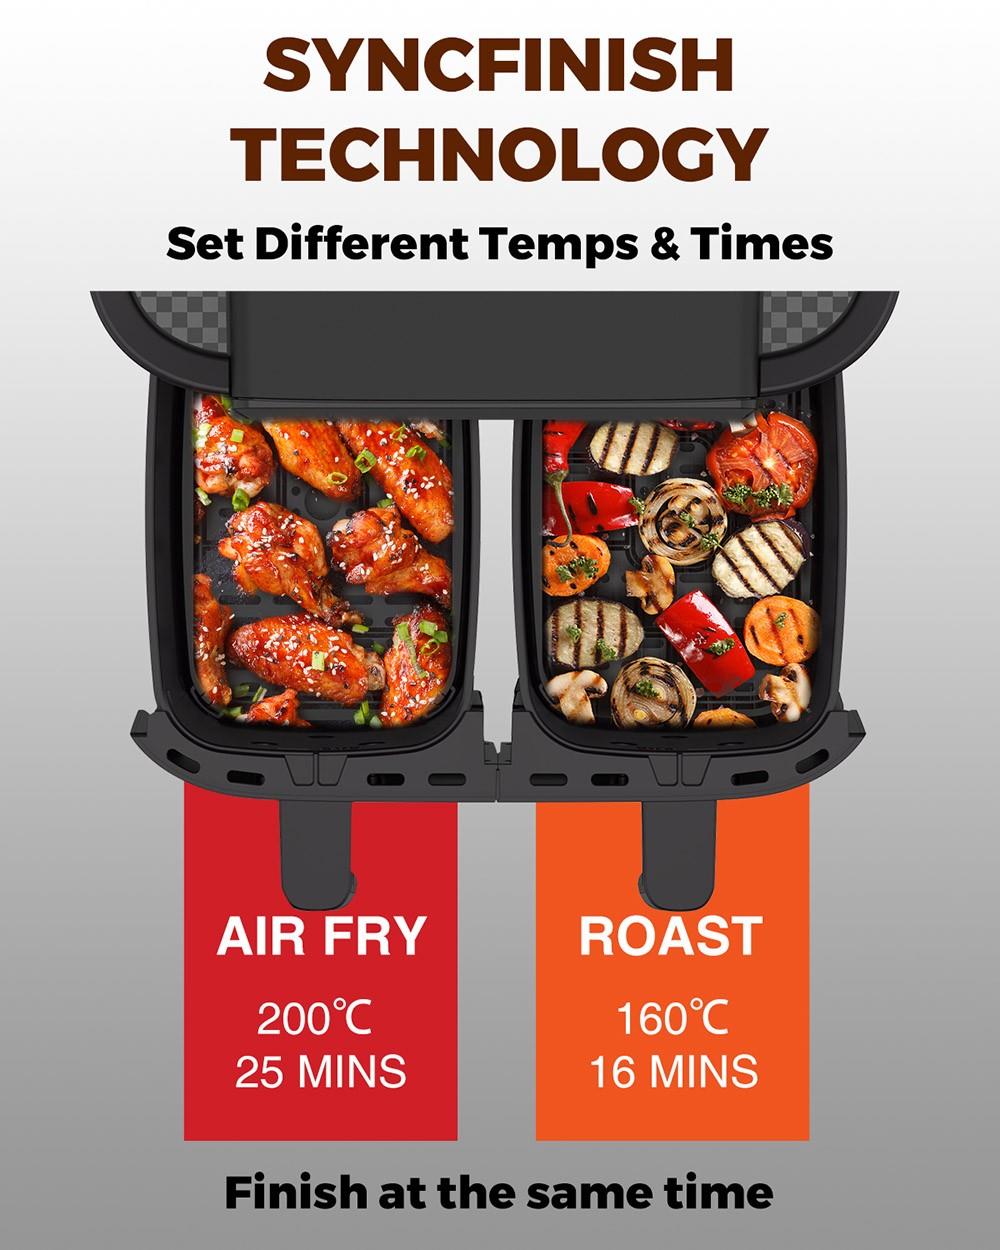 JOYAMI 1800W Air Fryer with 2 Baskets, Dual Zone, 7.6L/8QT Capacity, Sync-Finish Function